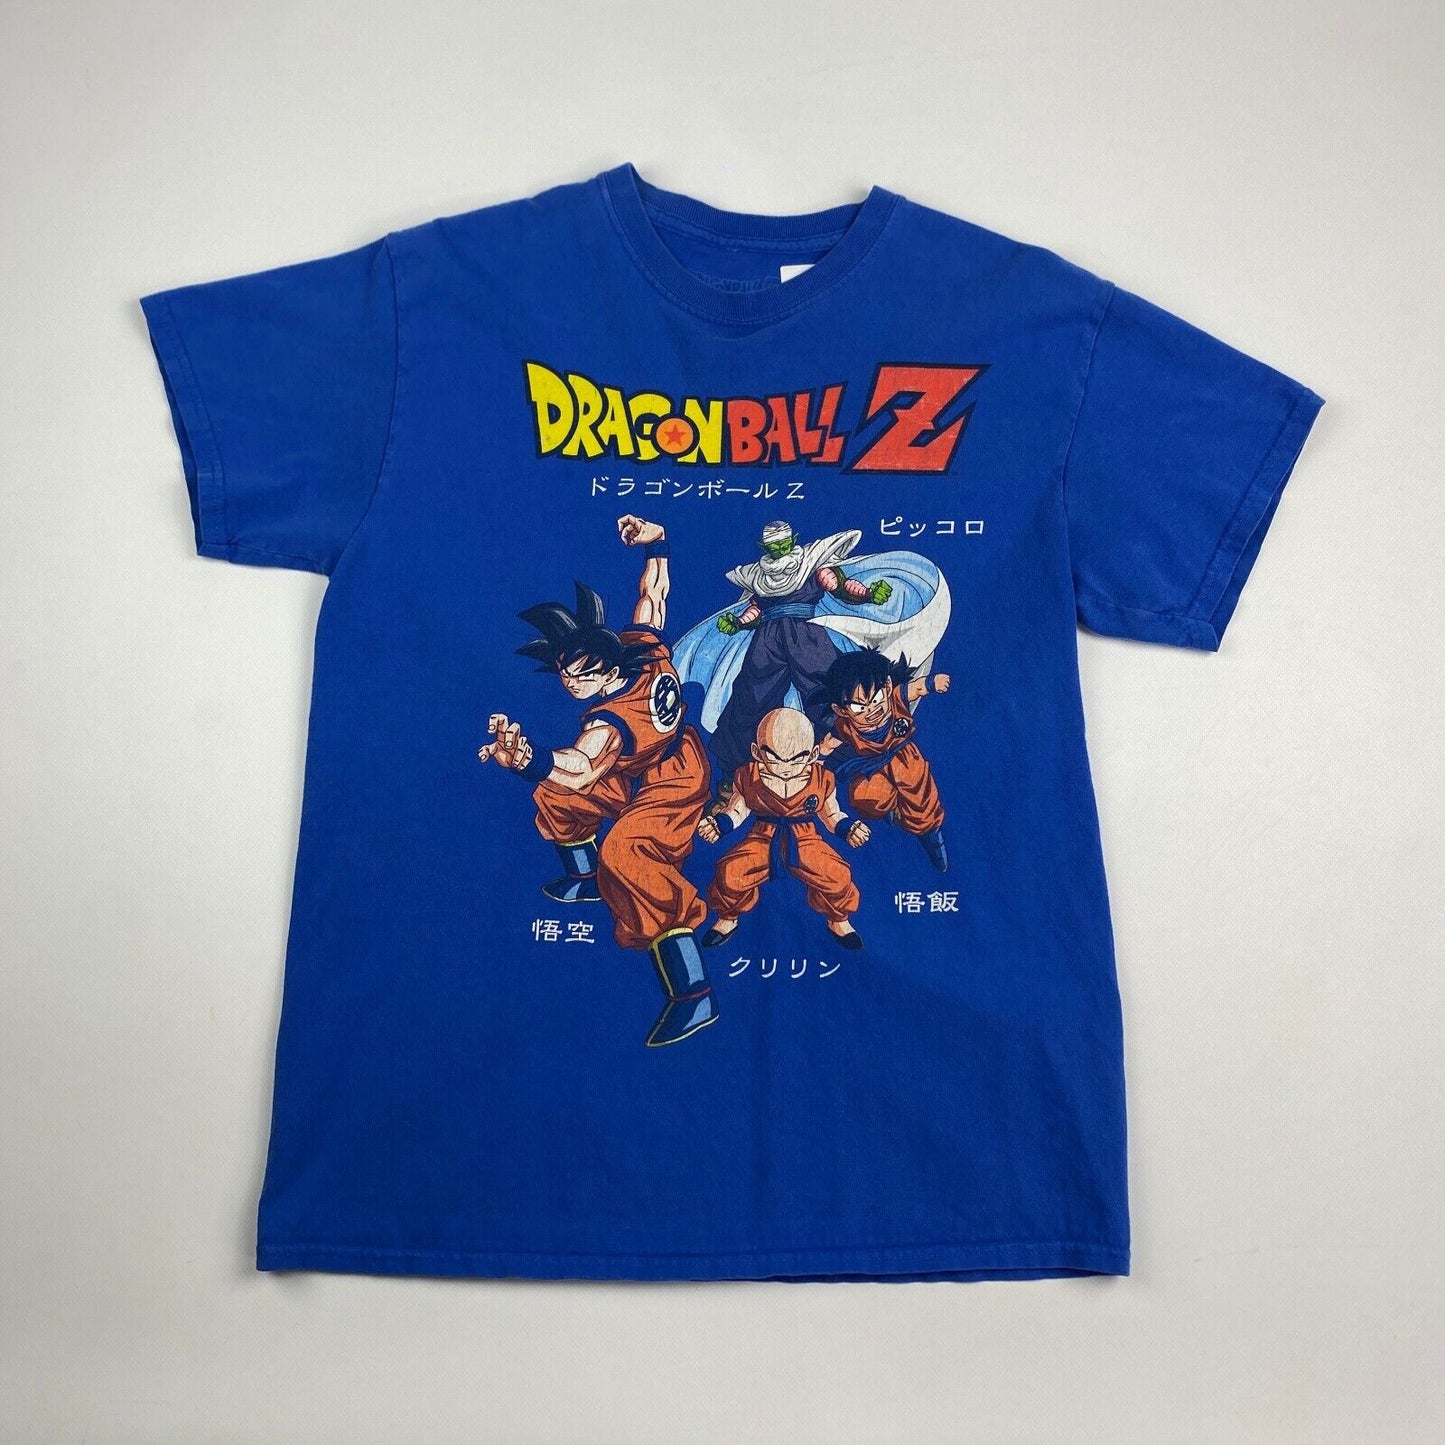 Dragon Ball Z Big Graphic Blue T-Shirt sz Medium Men